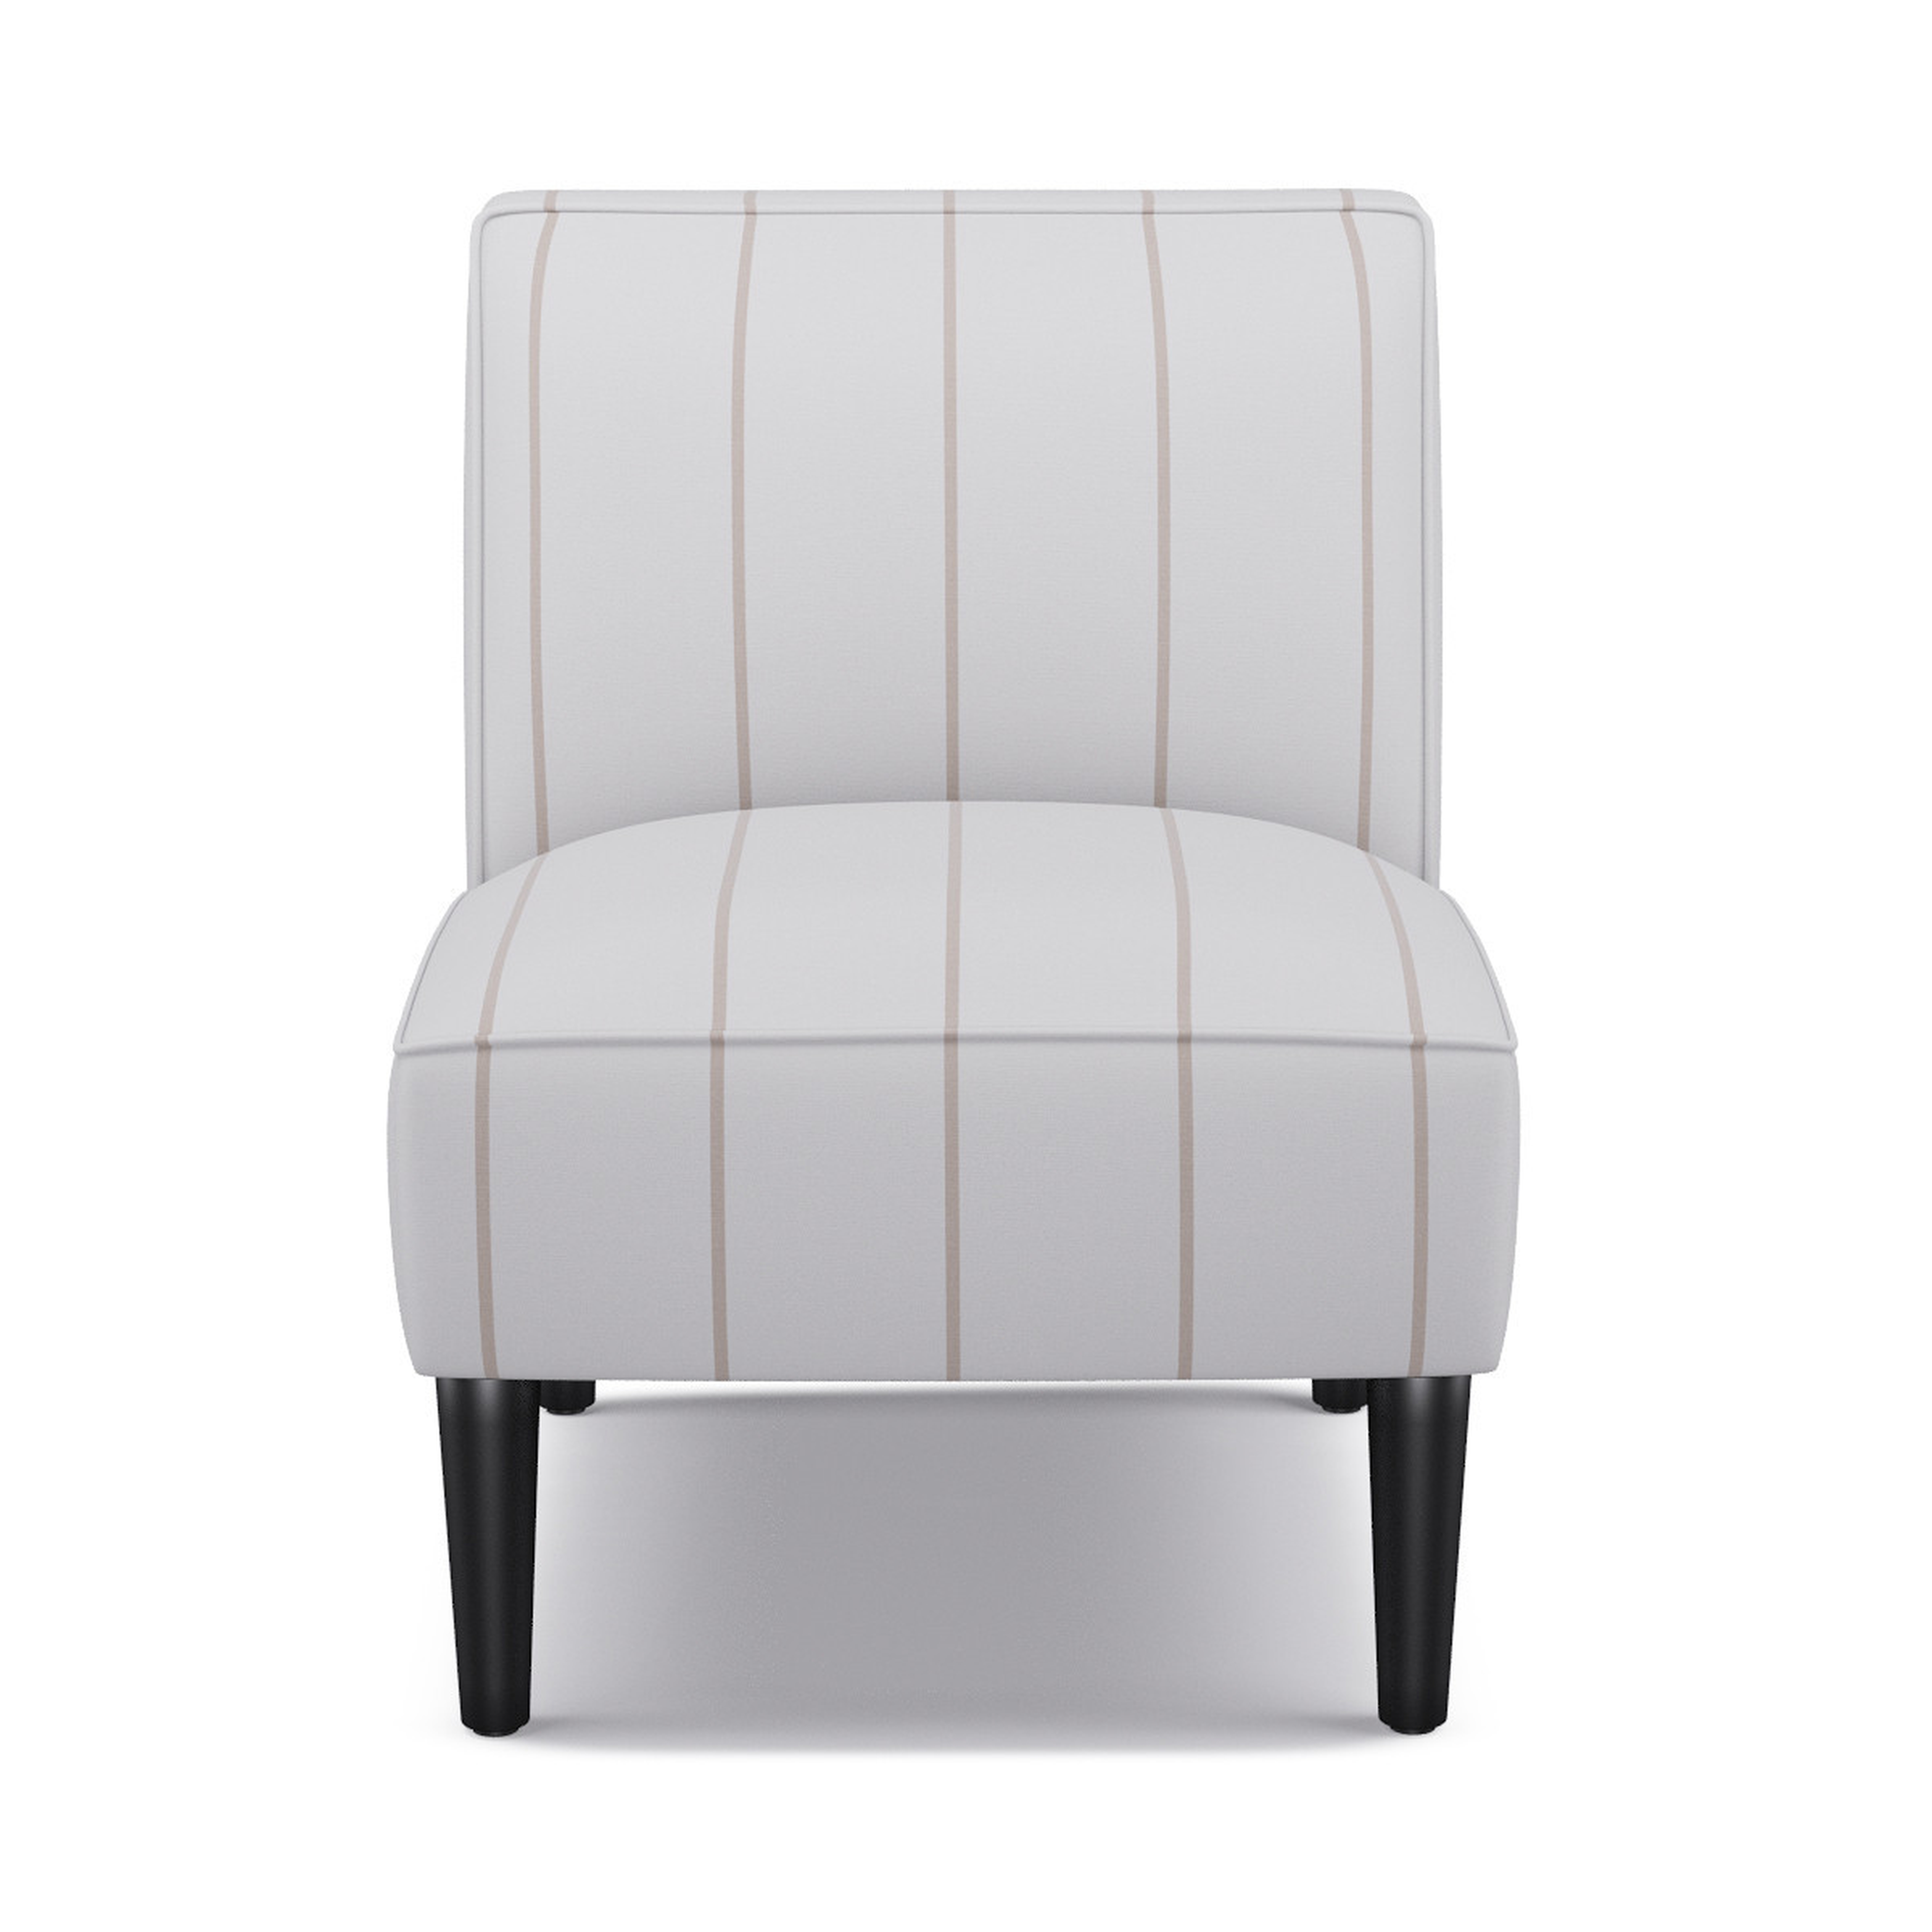 Slipper Chair | Stripe In Sand - The Inside